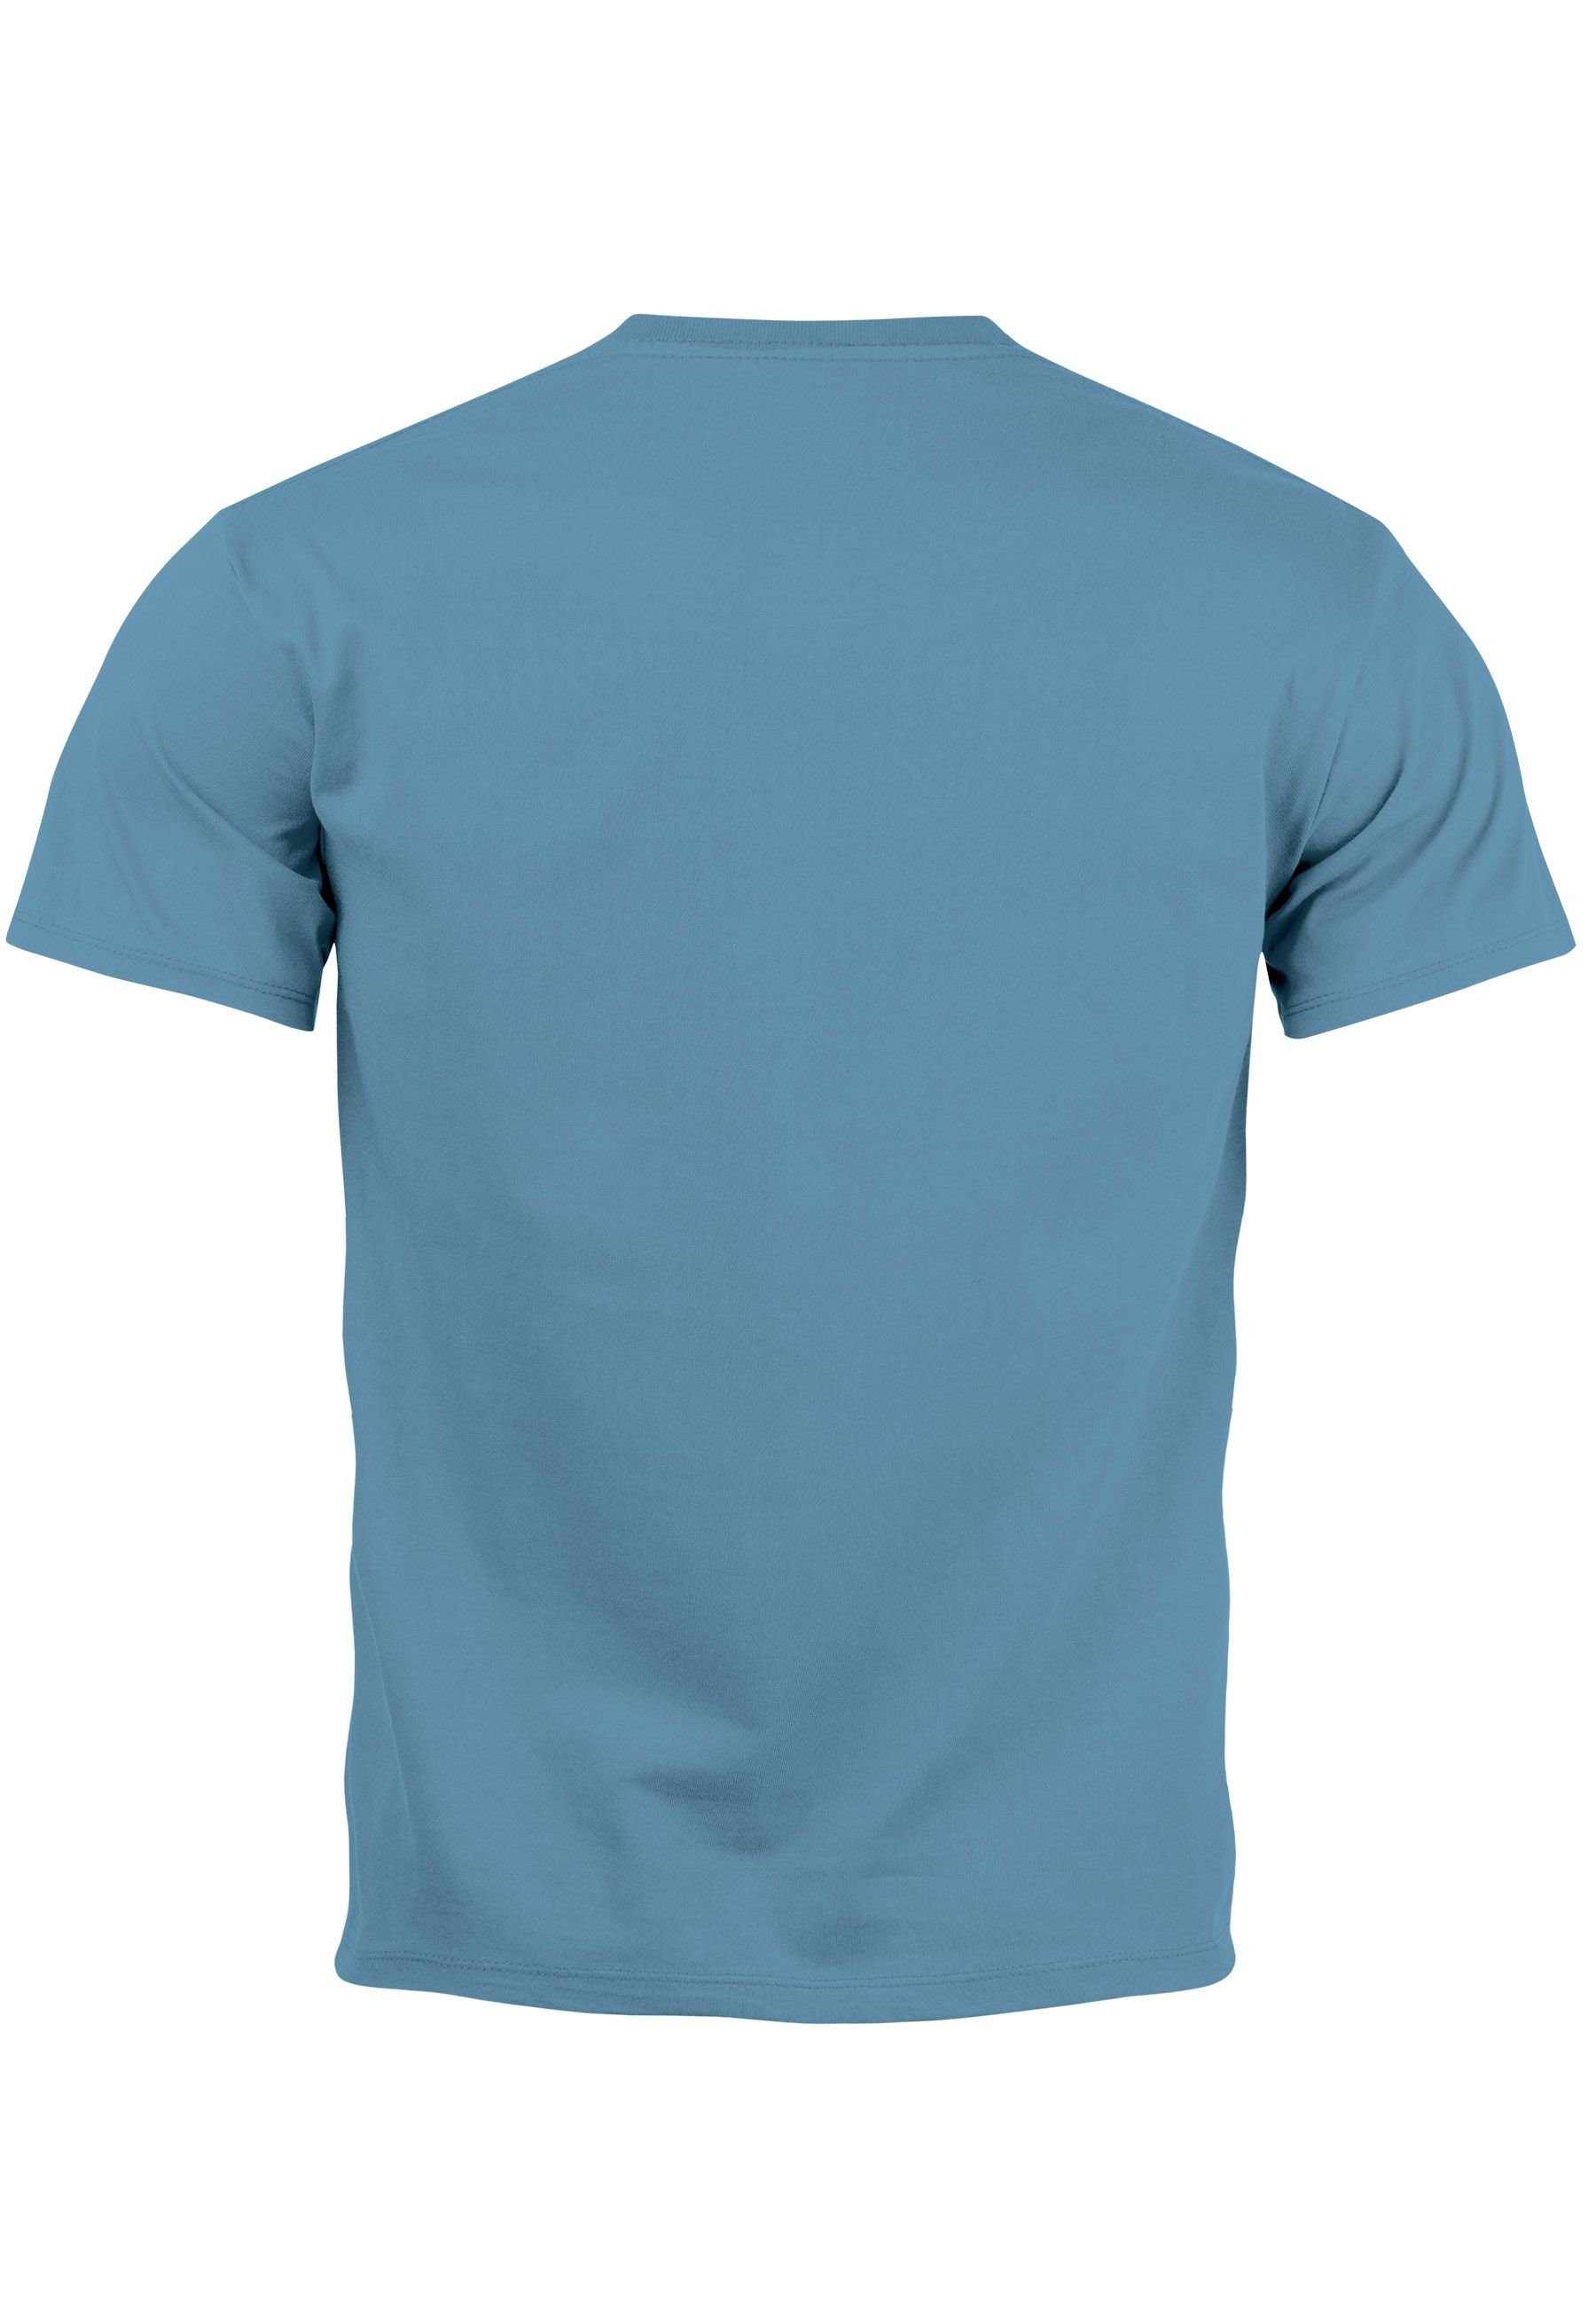 blue Logo T-Shirt Vogel stone mit Aufdruck Polygon Brustprint Print-Shirt Fashion Neverless Herren Print Origami